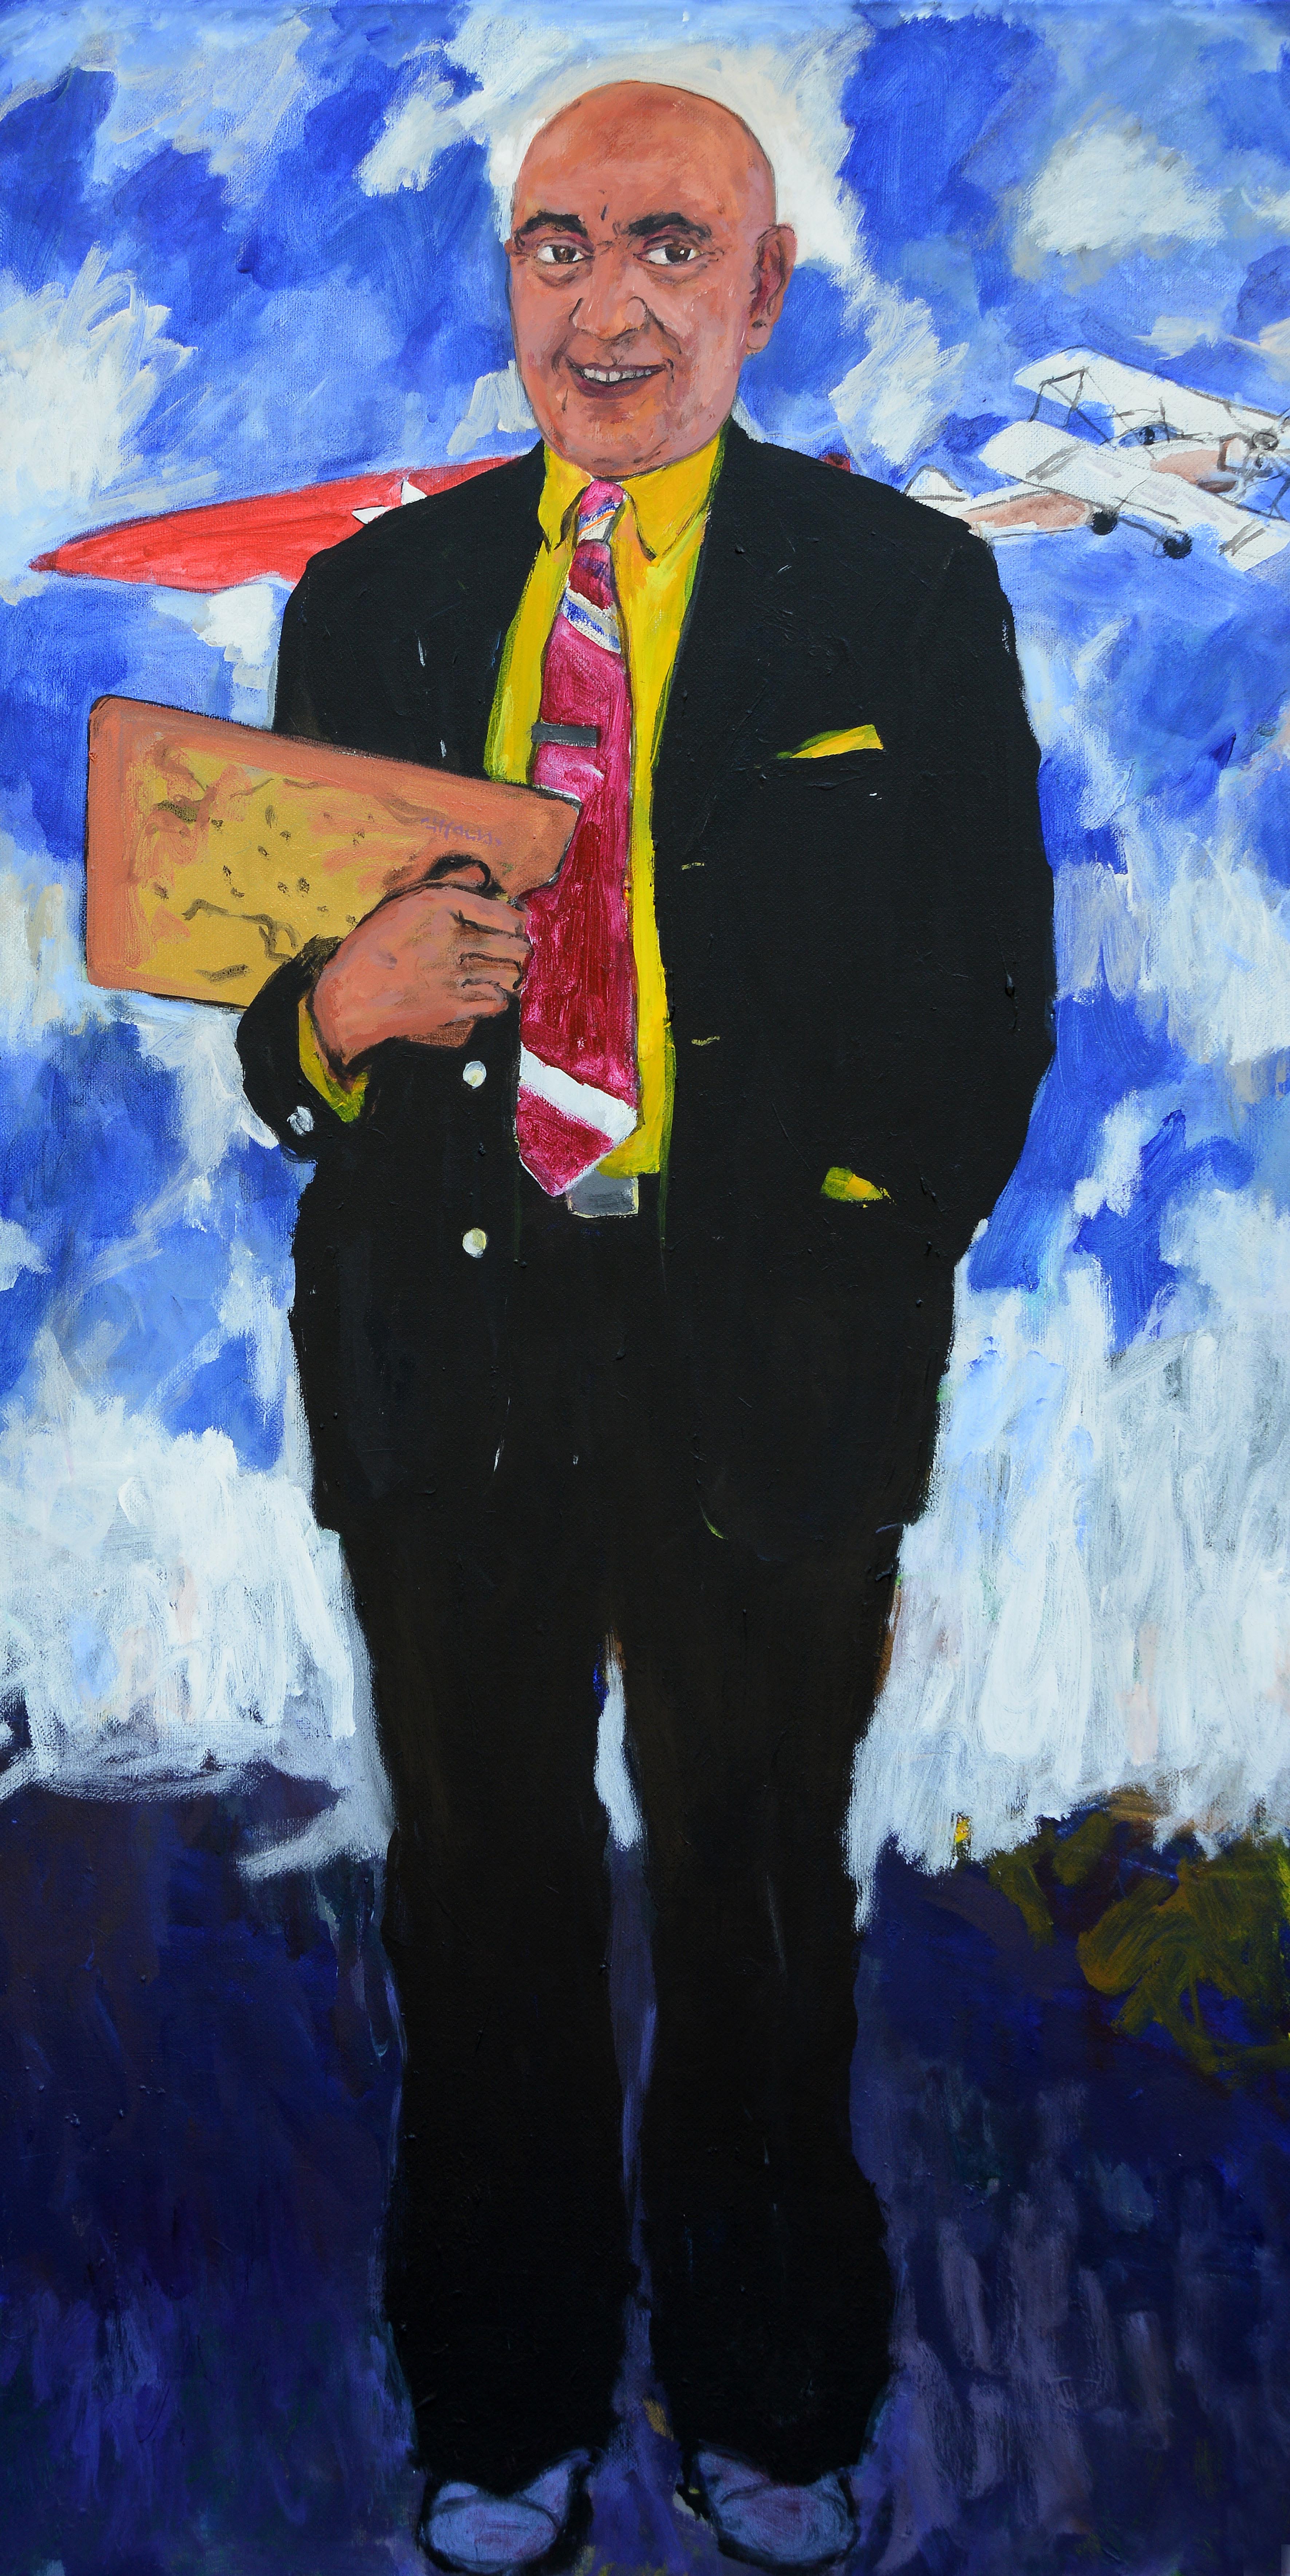 İsimsiz- Untitled, Tuval üzerine yağlıboya- Oil on canvas, 178x92 cm